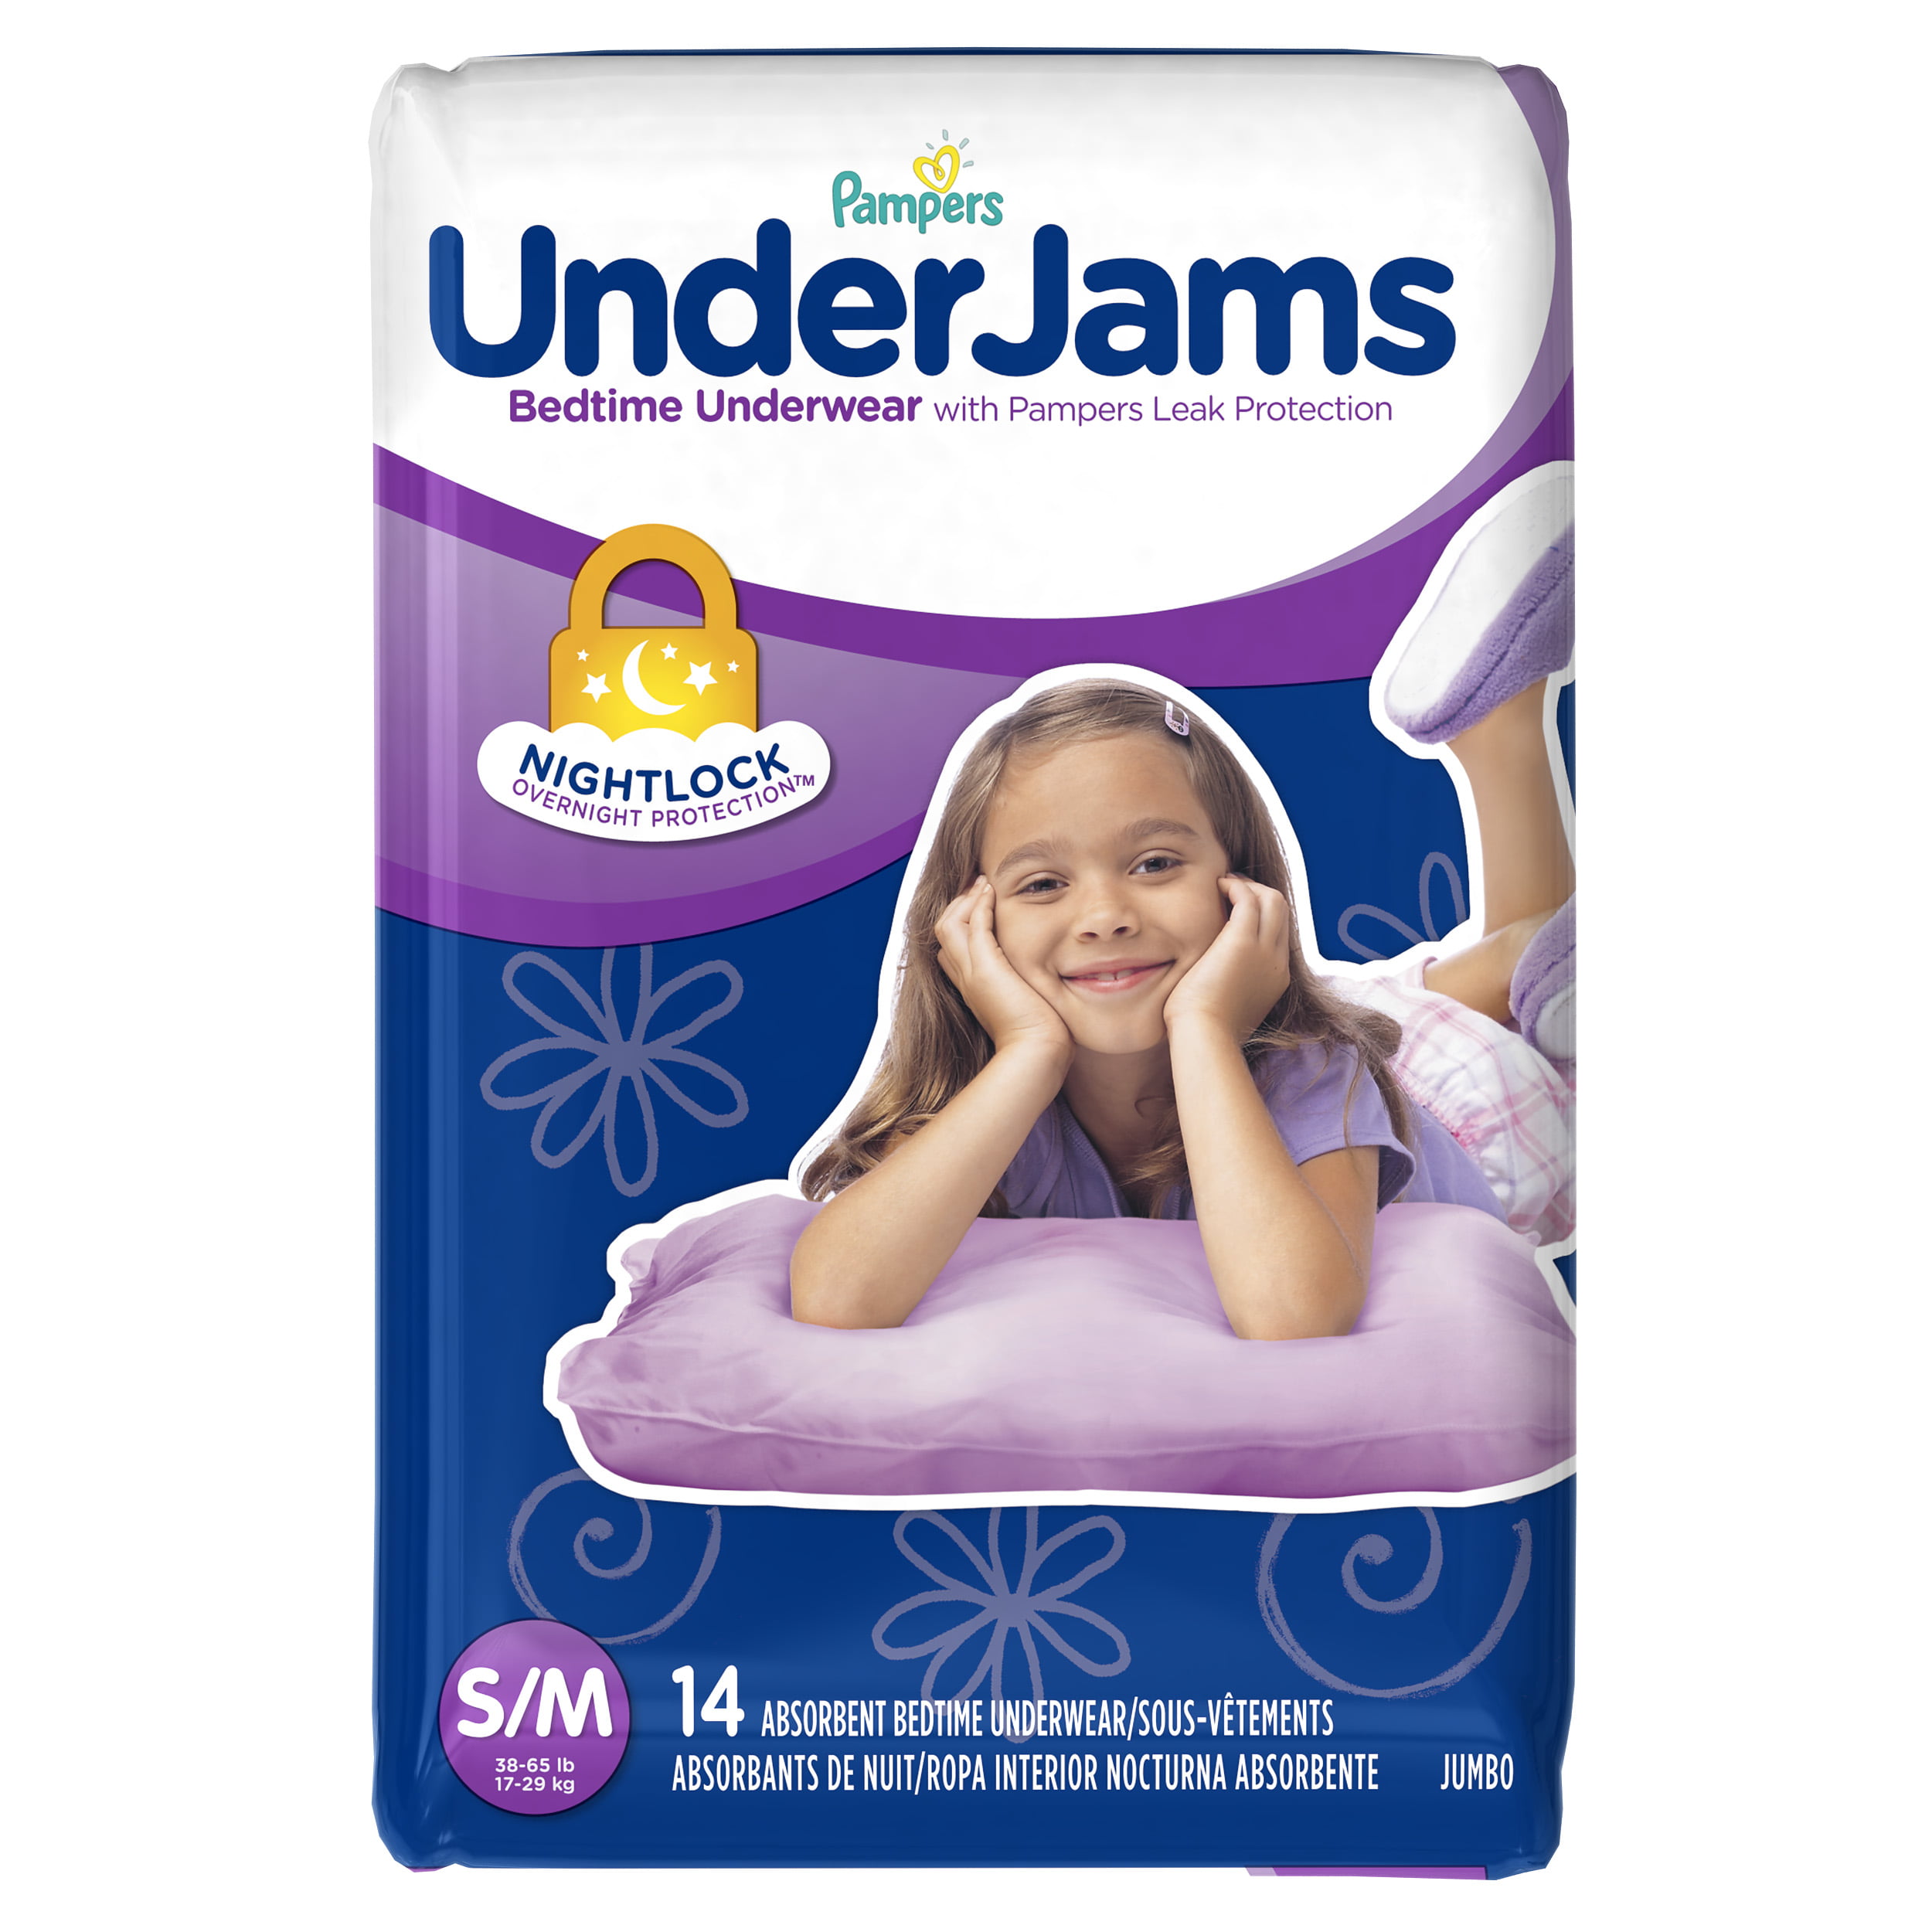 Pack of 2 38-65 lbs Pampers UnderJams Bedtime Underwear Boys Size S/M 